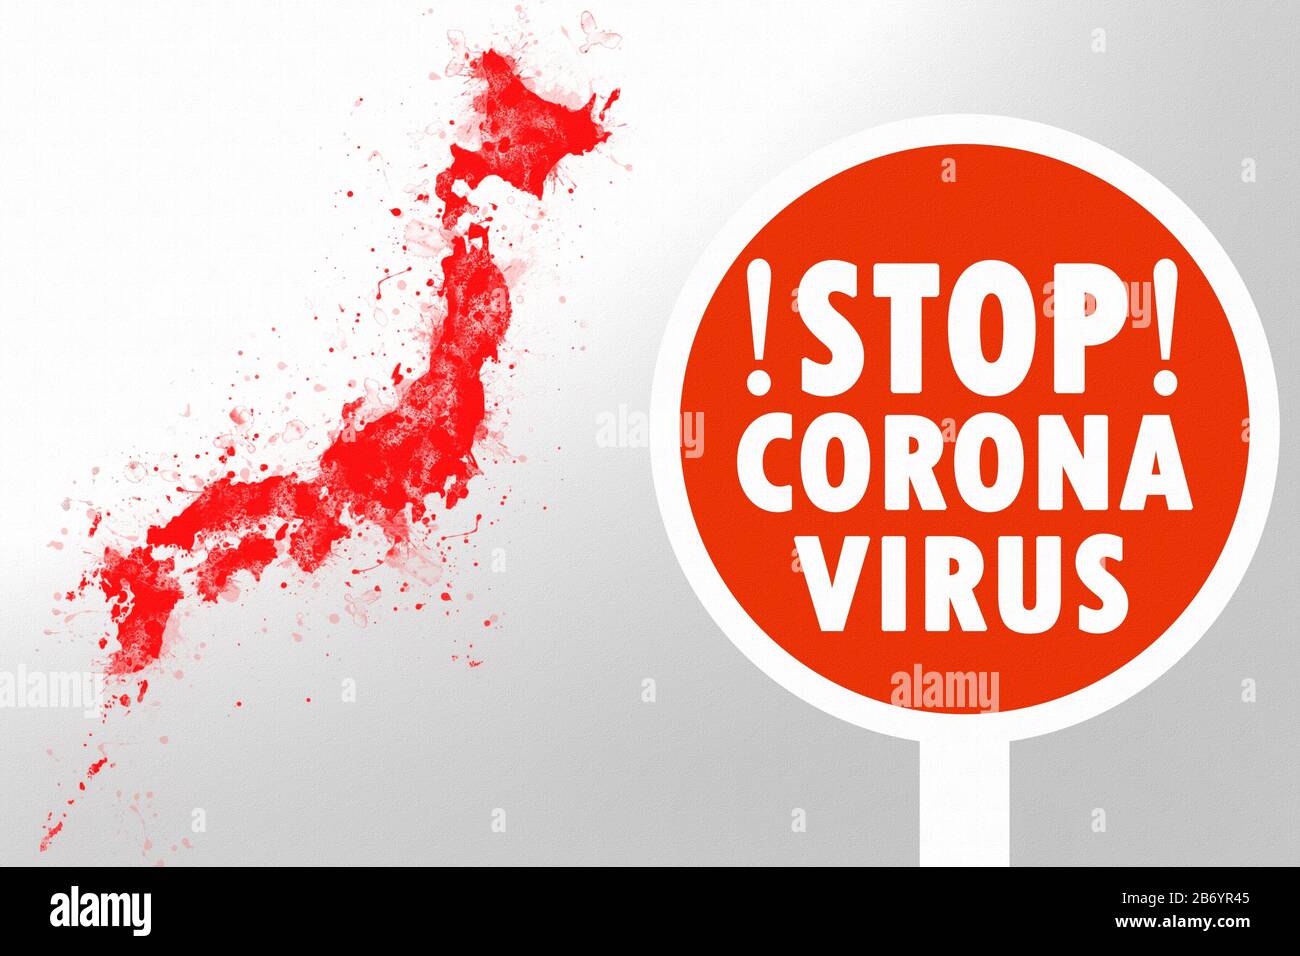 Coronavirus (COVID-19) health alert in Japan.Covid 19 continues to spread around the globe - World Health Organization declares coronavirus a pandemic Stock Photo